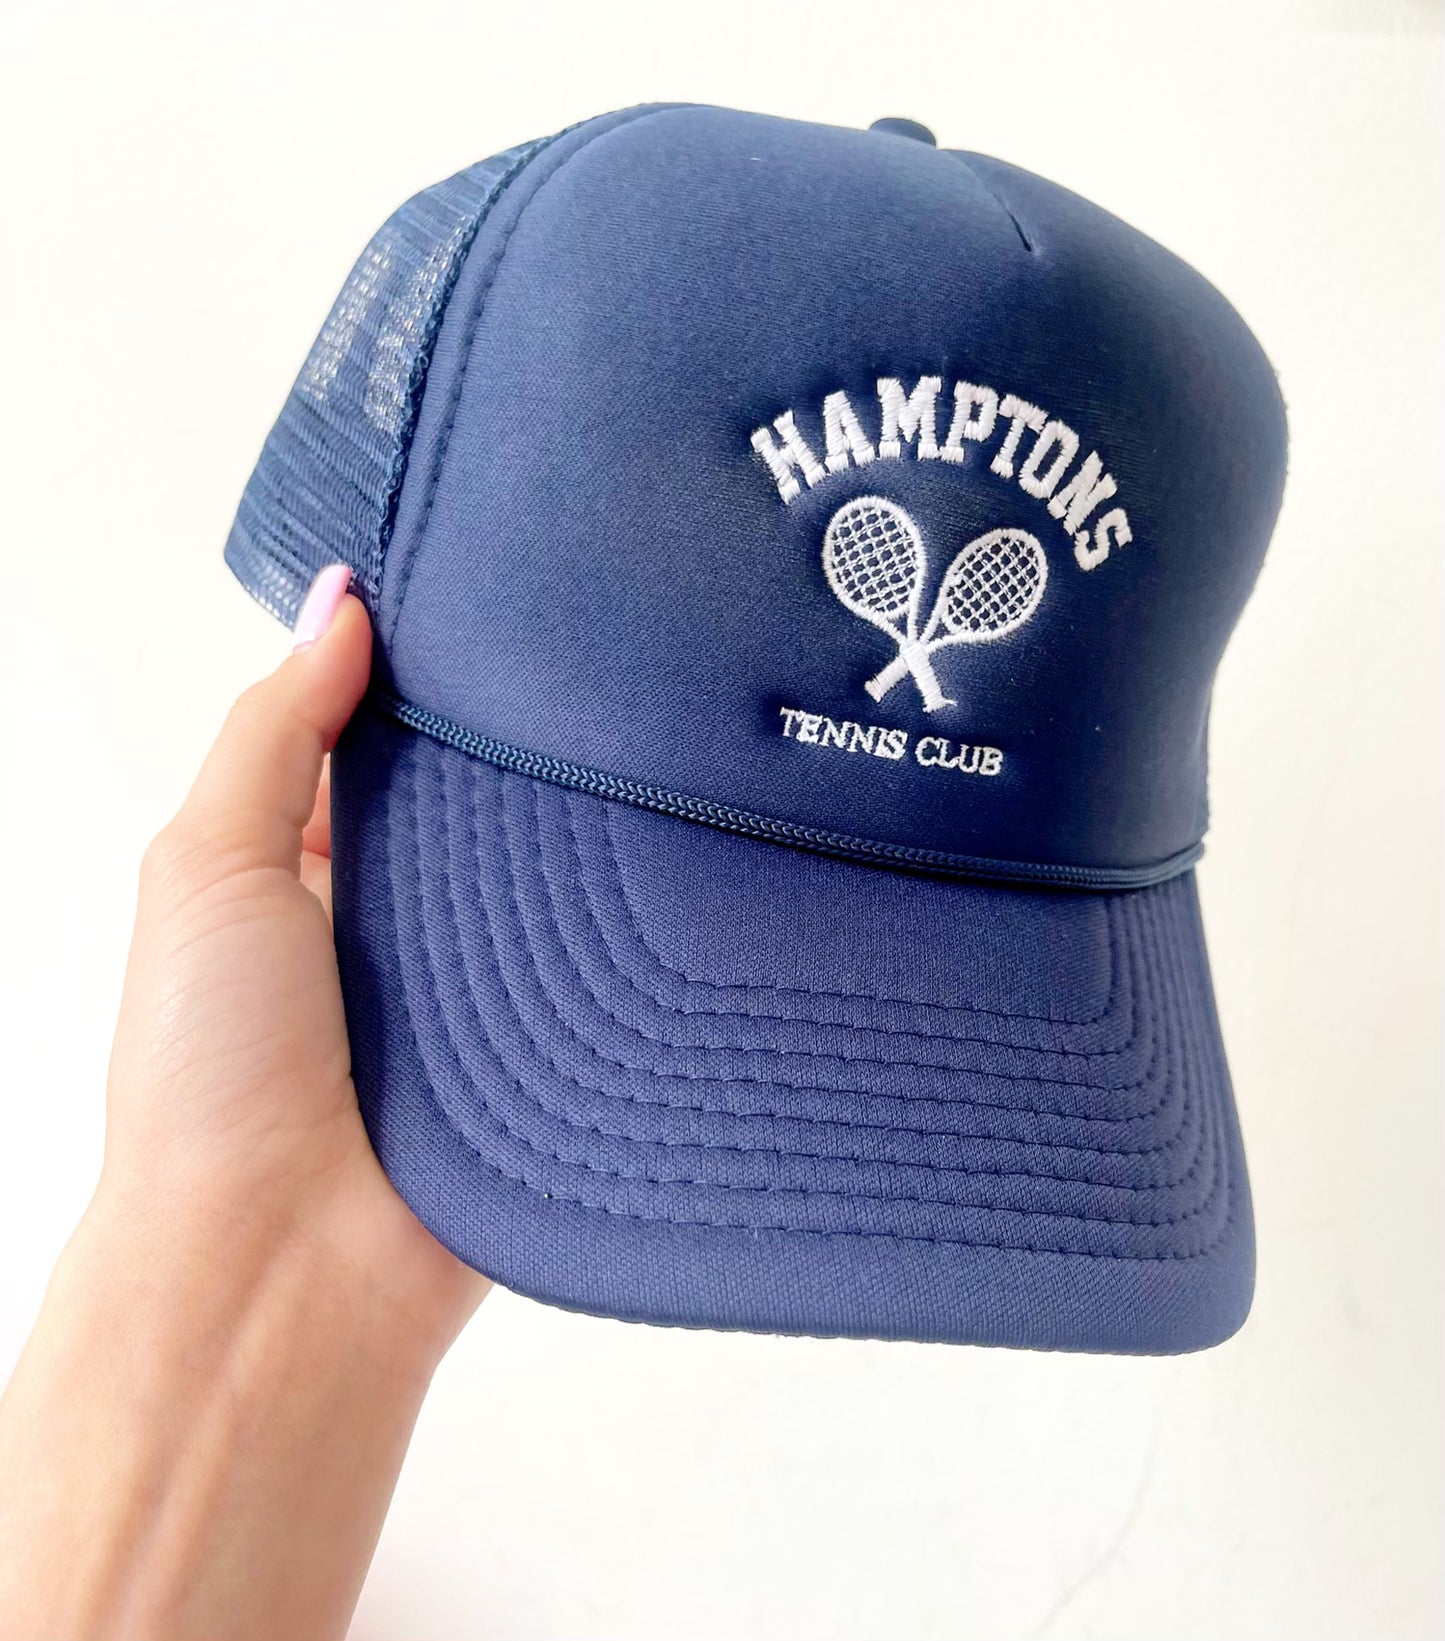 HAMPTONS TENNIS CLUB HAT